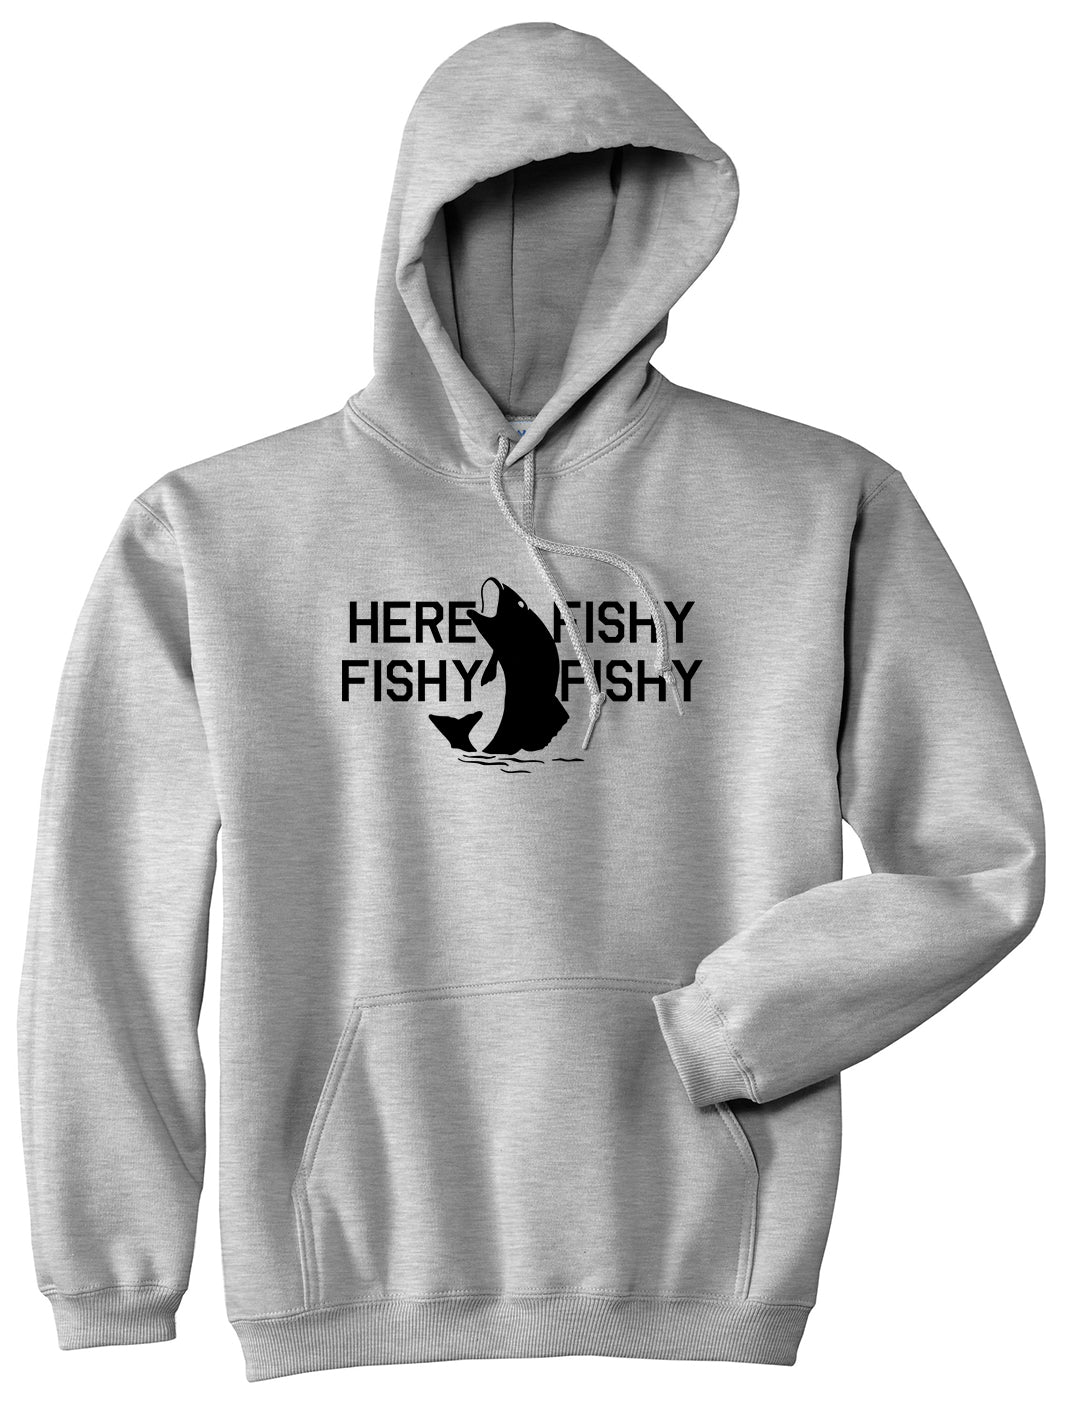 Here Fishy Fishy Fishy Fisherman Mens Pullover Hoodie Grey